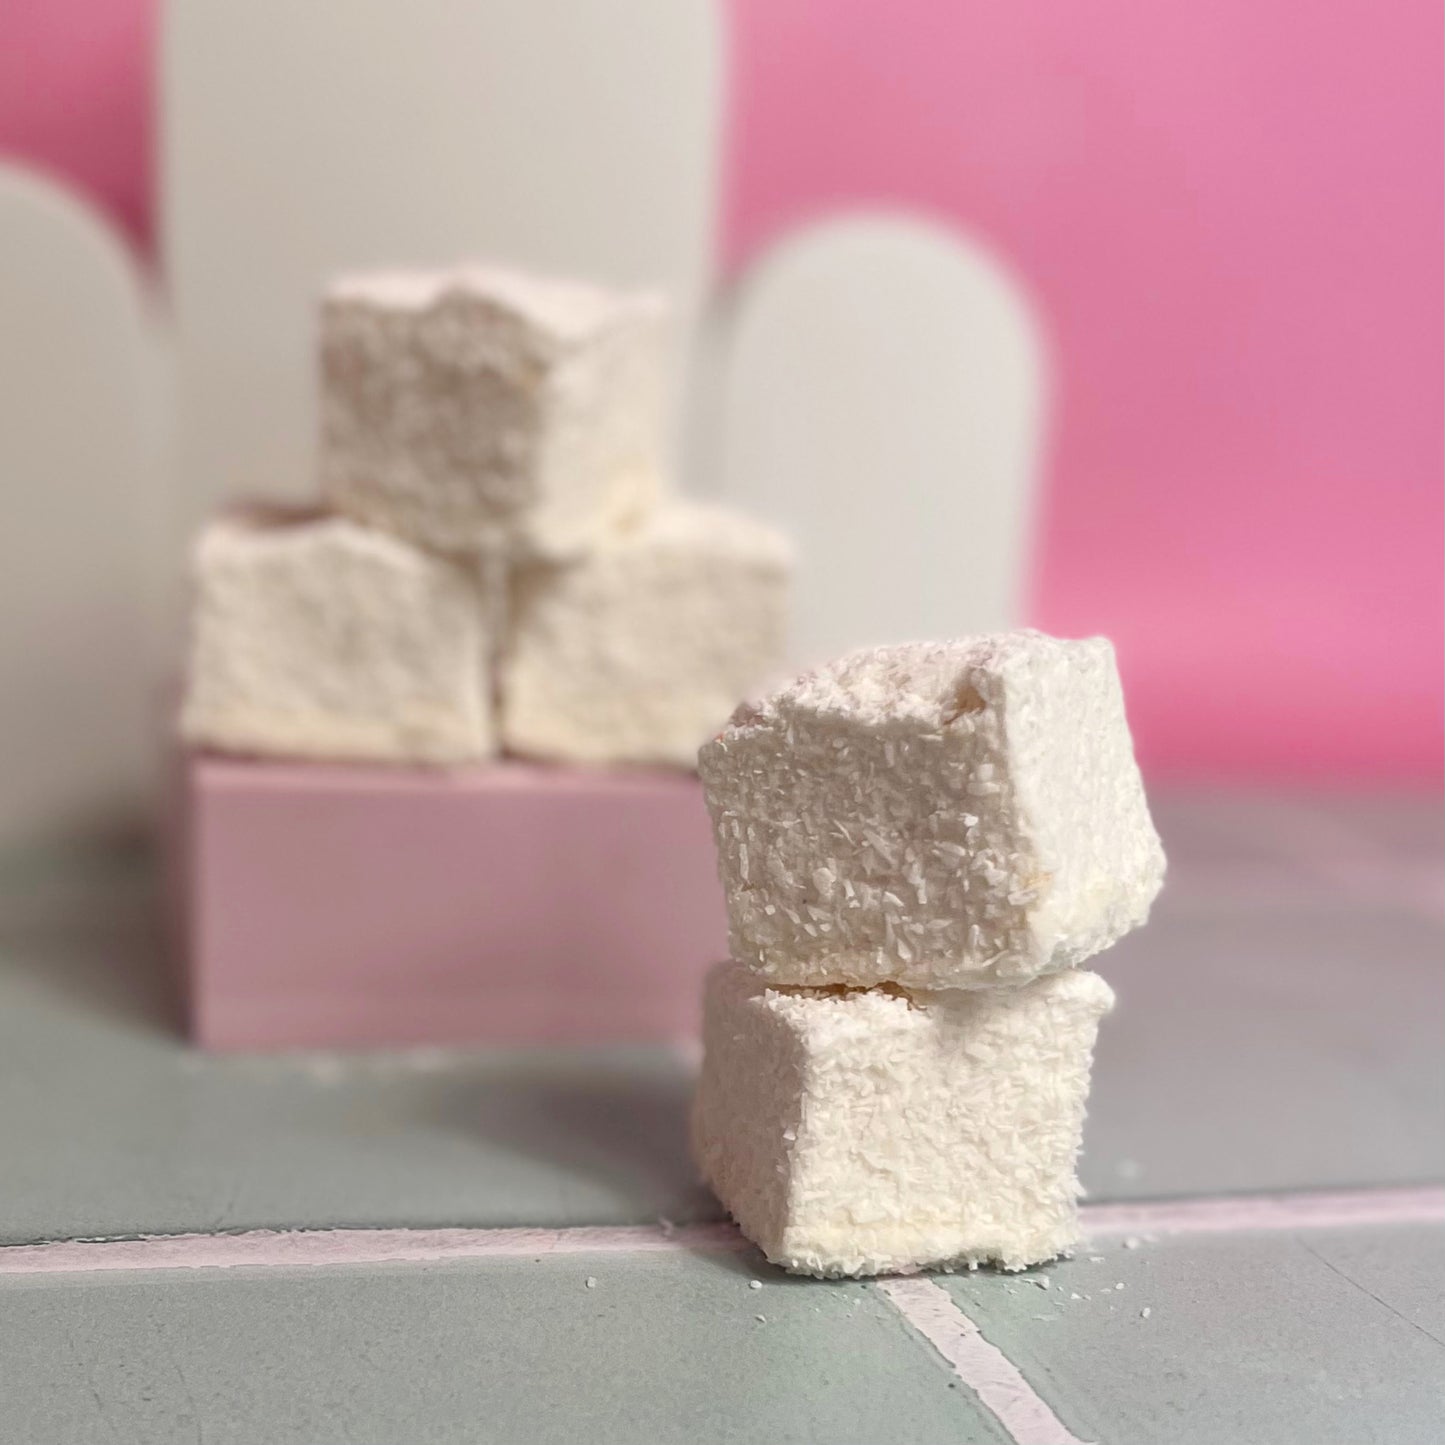 Coconut flavoured vegan marshmallows